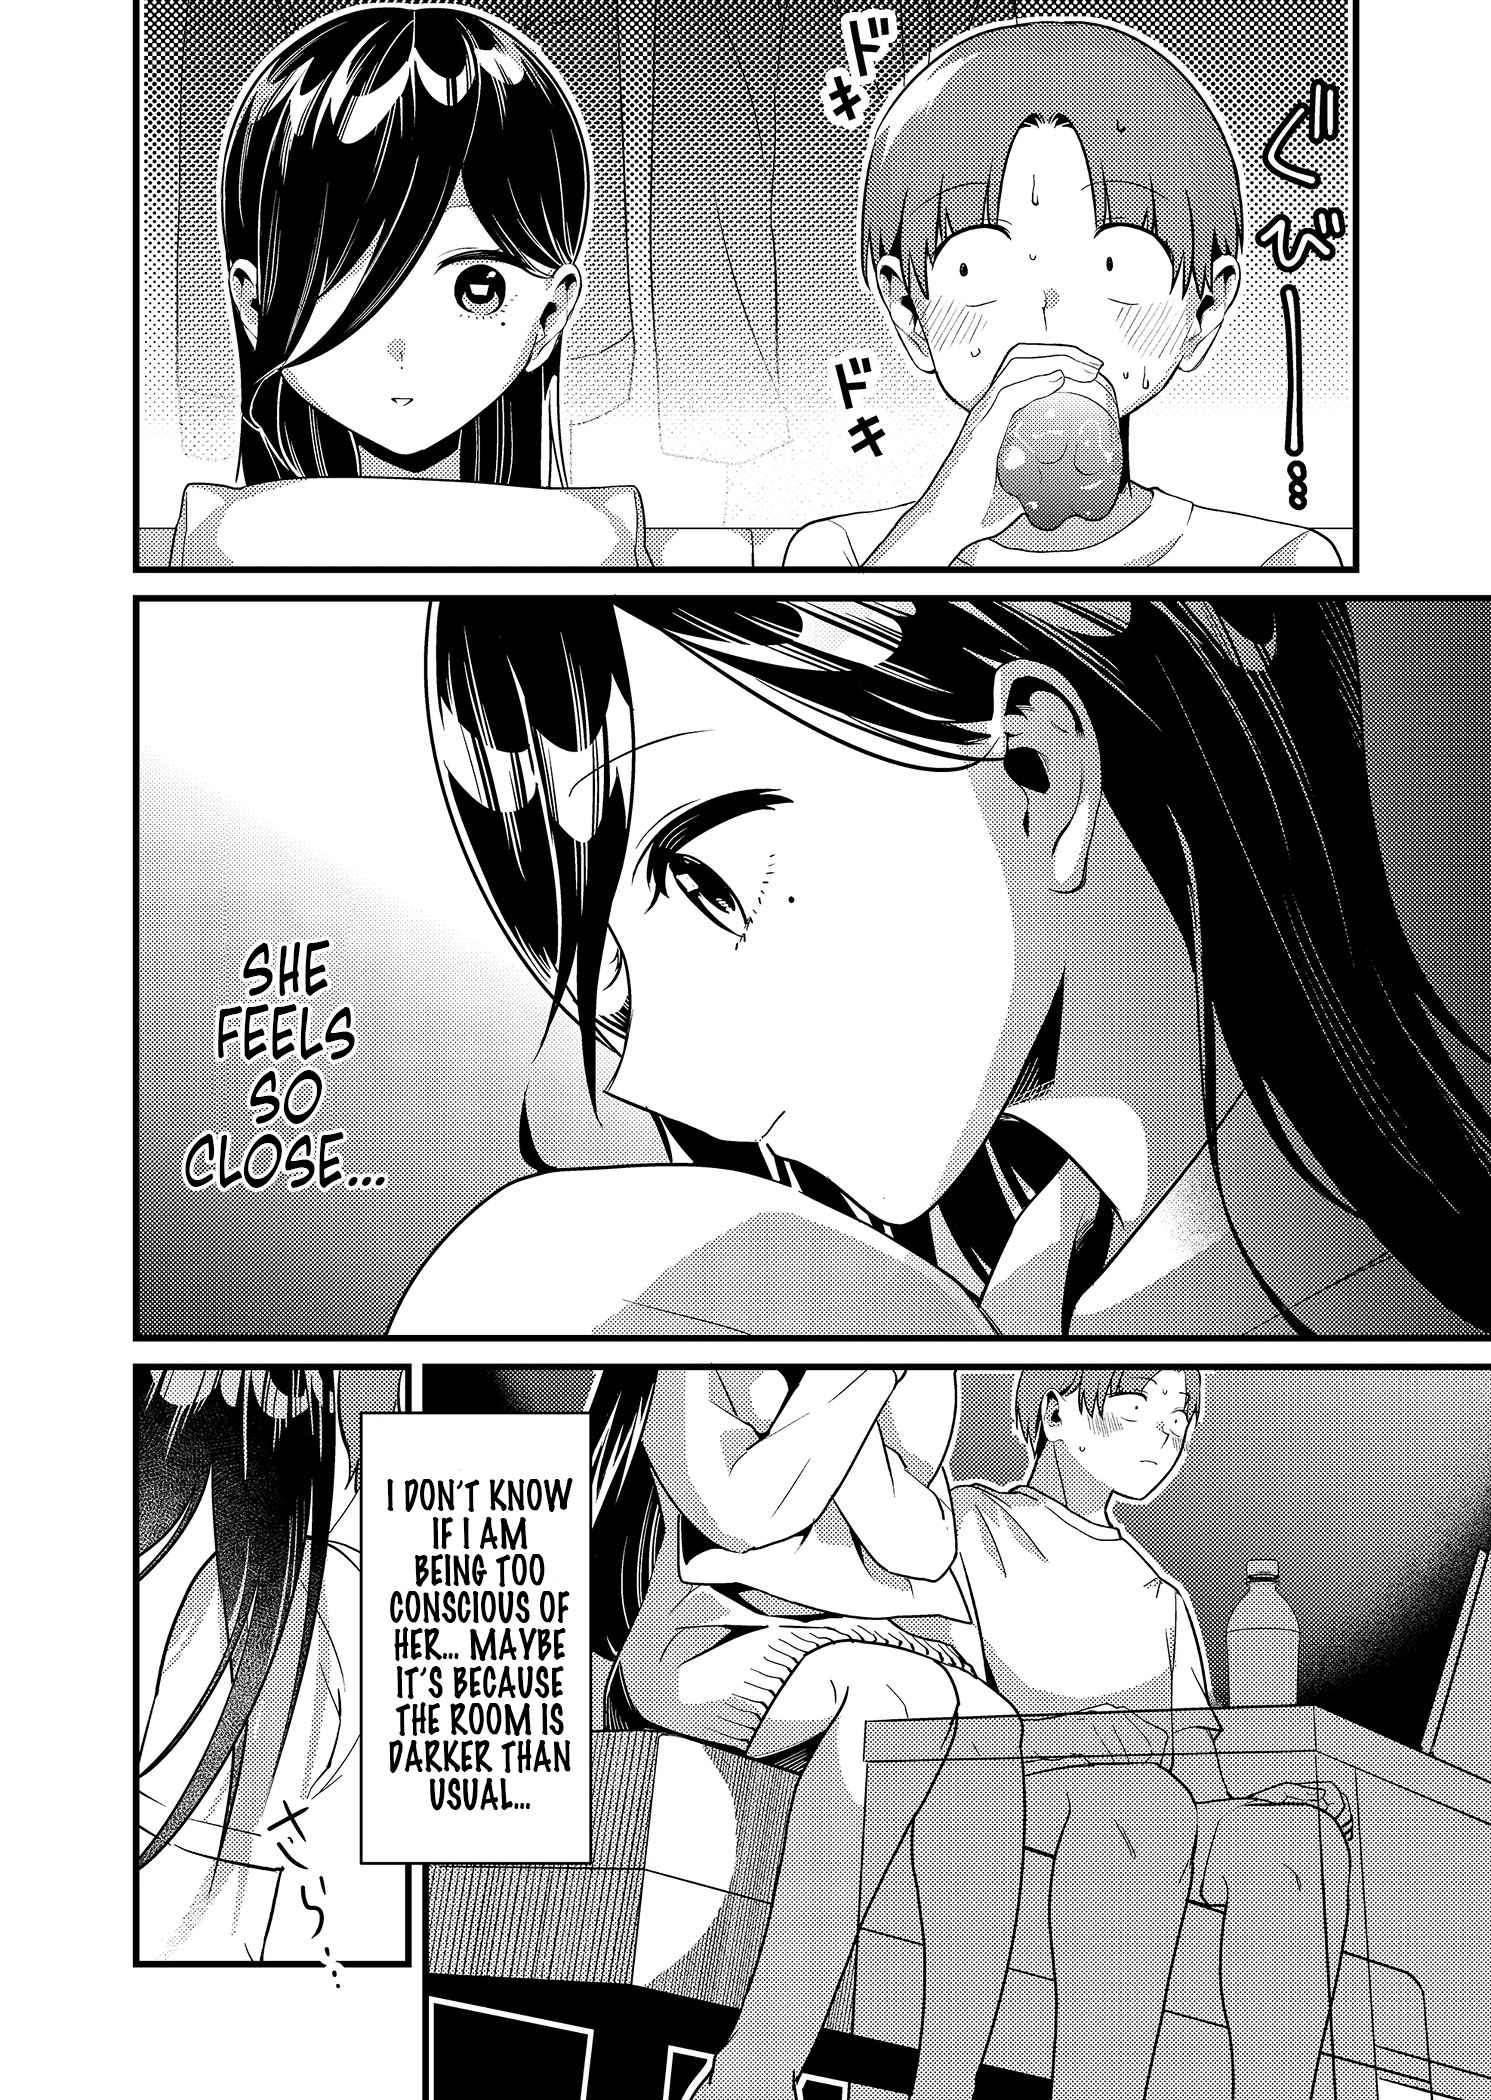 Tokimari-san is Completely Defenseless!! Chapter 5-eng-li - Page 6